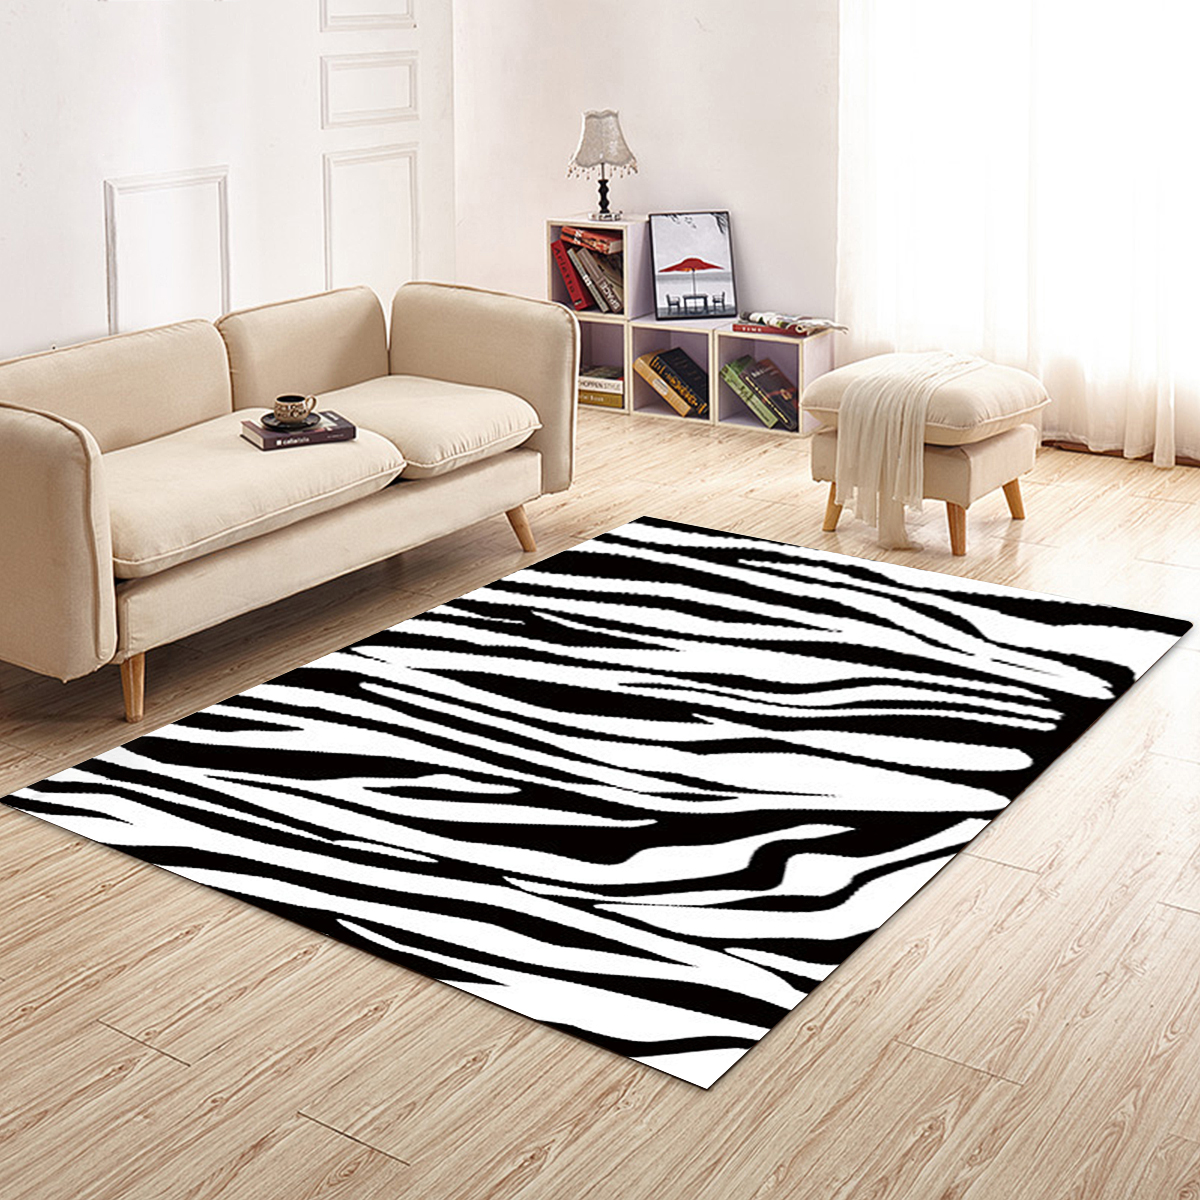 Modern-Minimalist-3D-Printed-Carpet-Living-Room-Bedroom-Bedside-Coffee-Table-Study-Restaurant-Hall-F-1730405-2